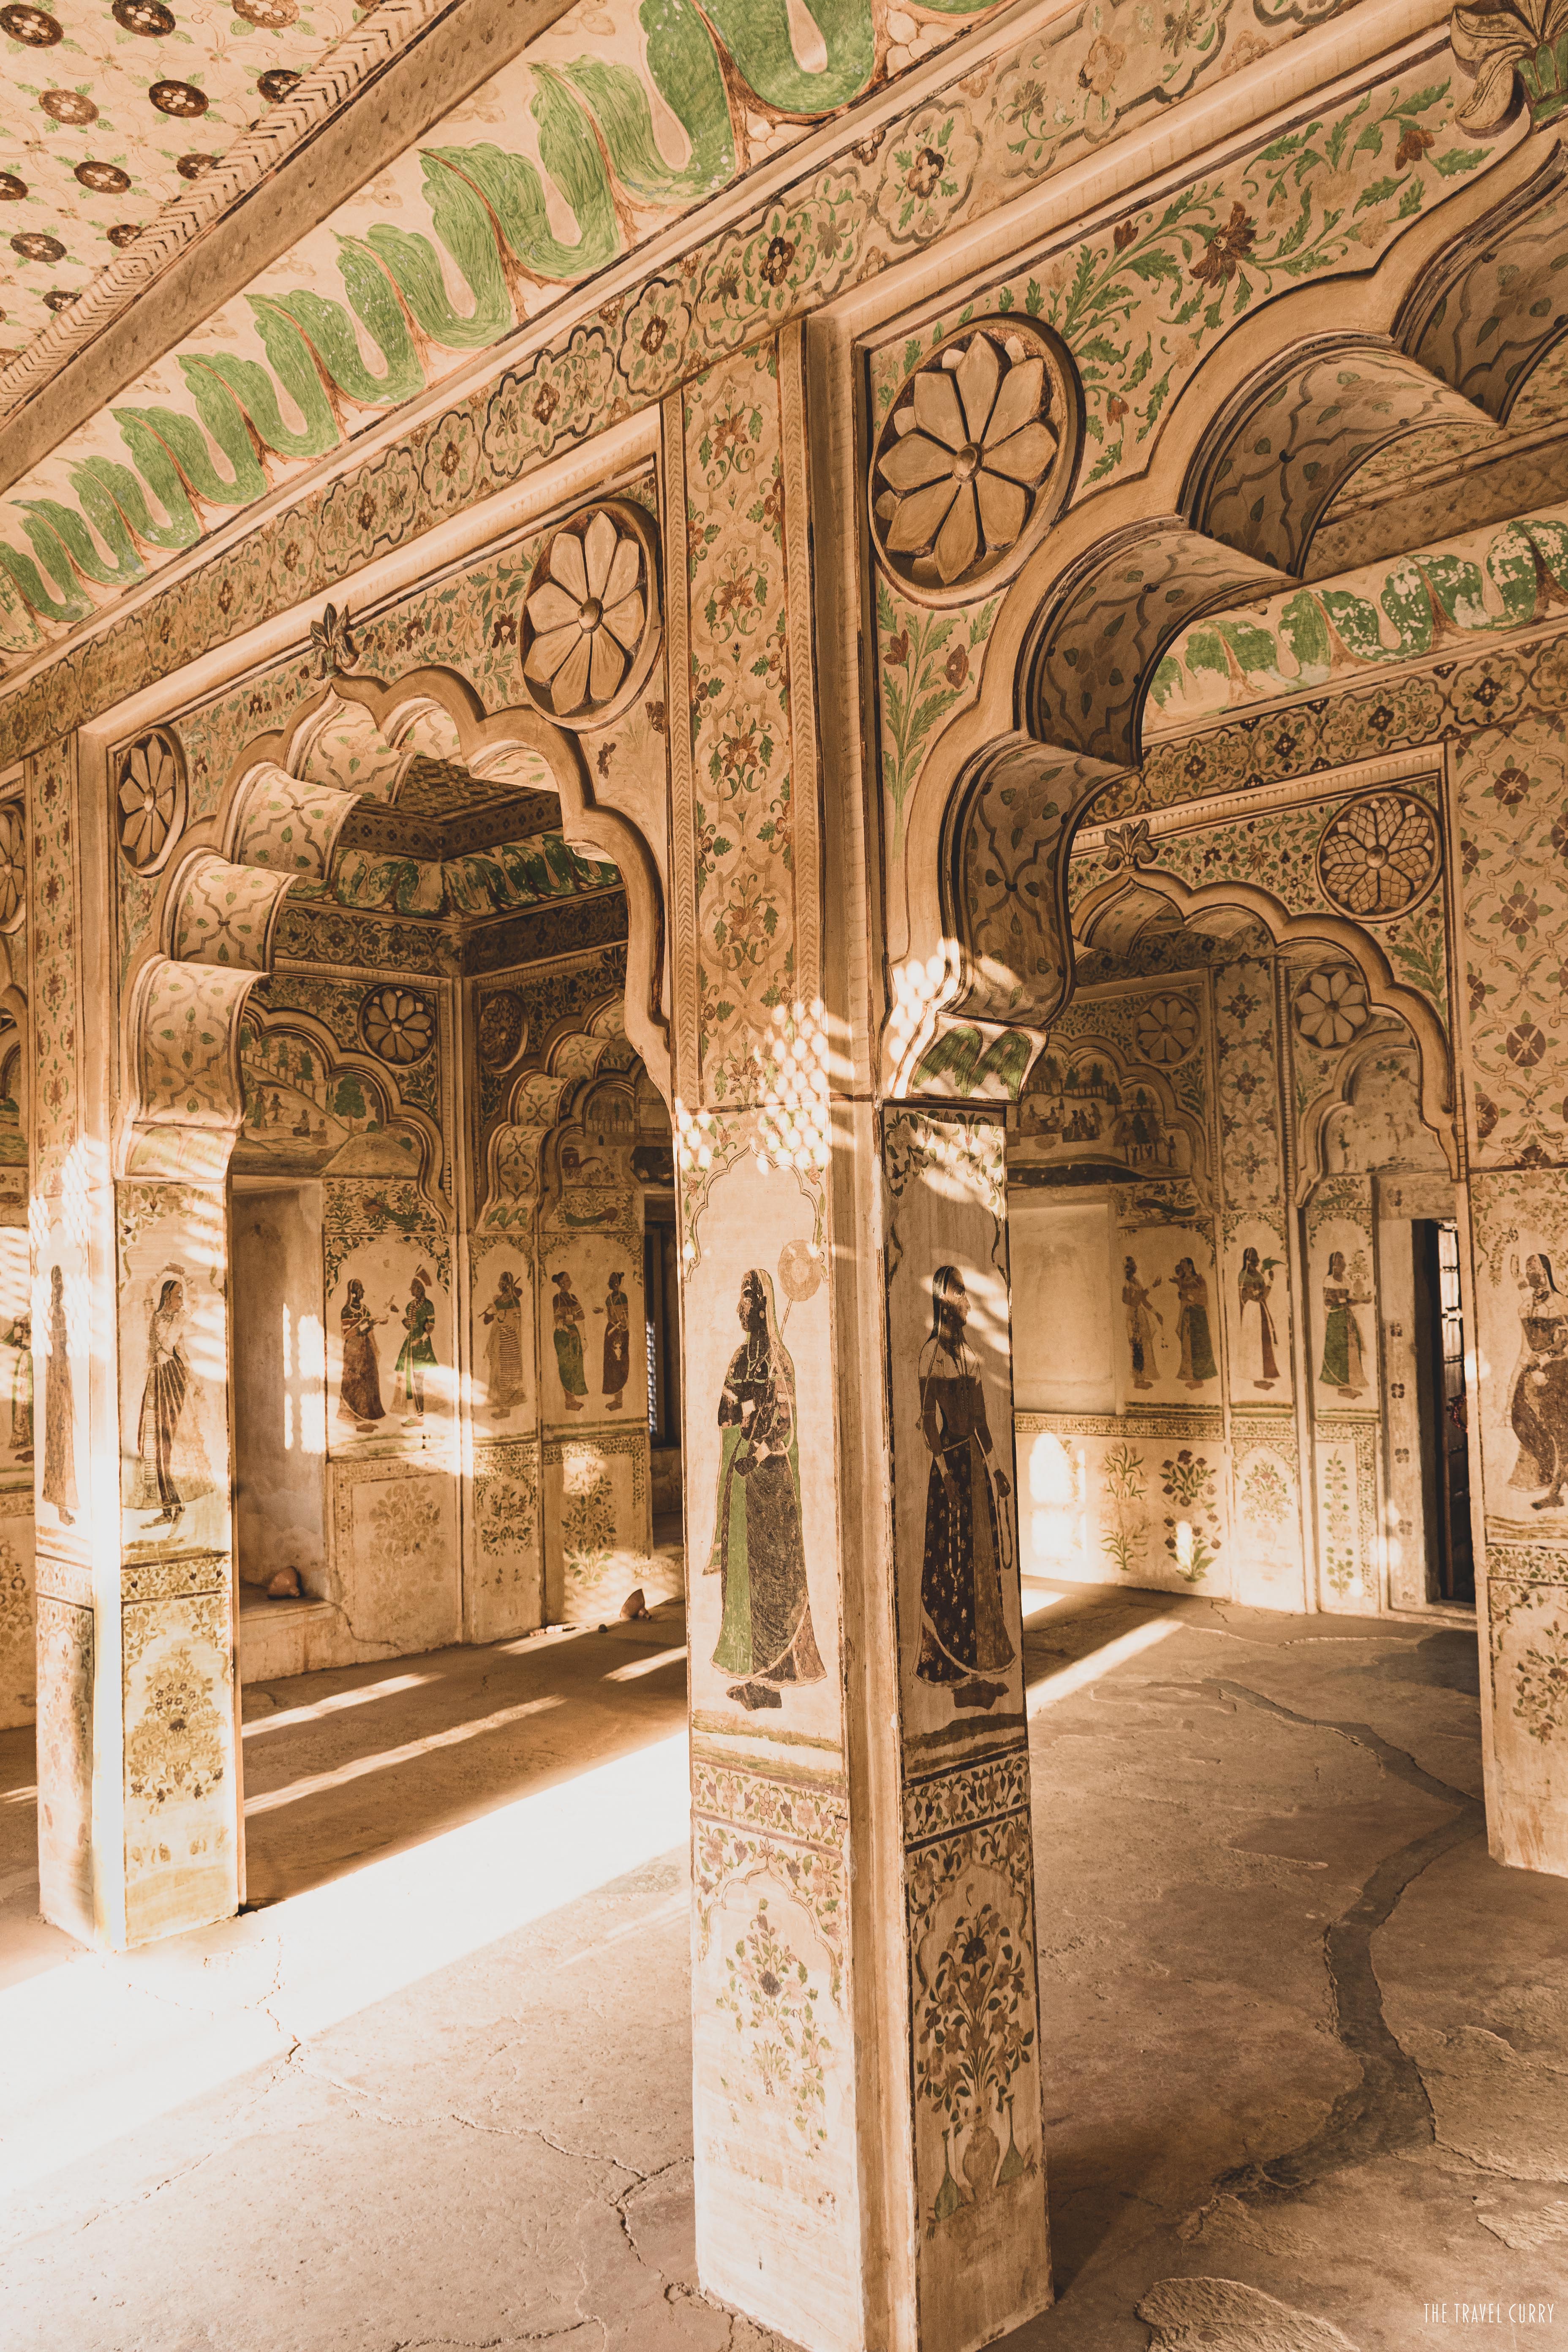 Inside Hadi rani palace in Nagaur Fort